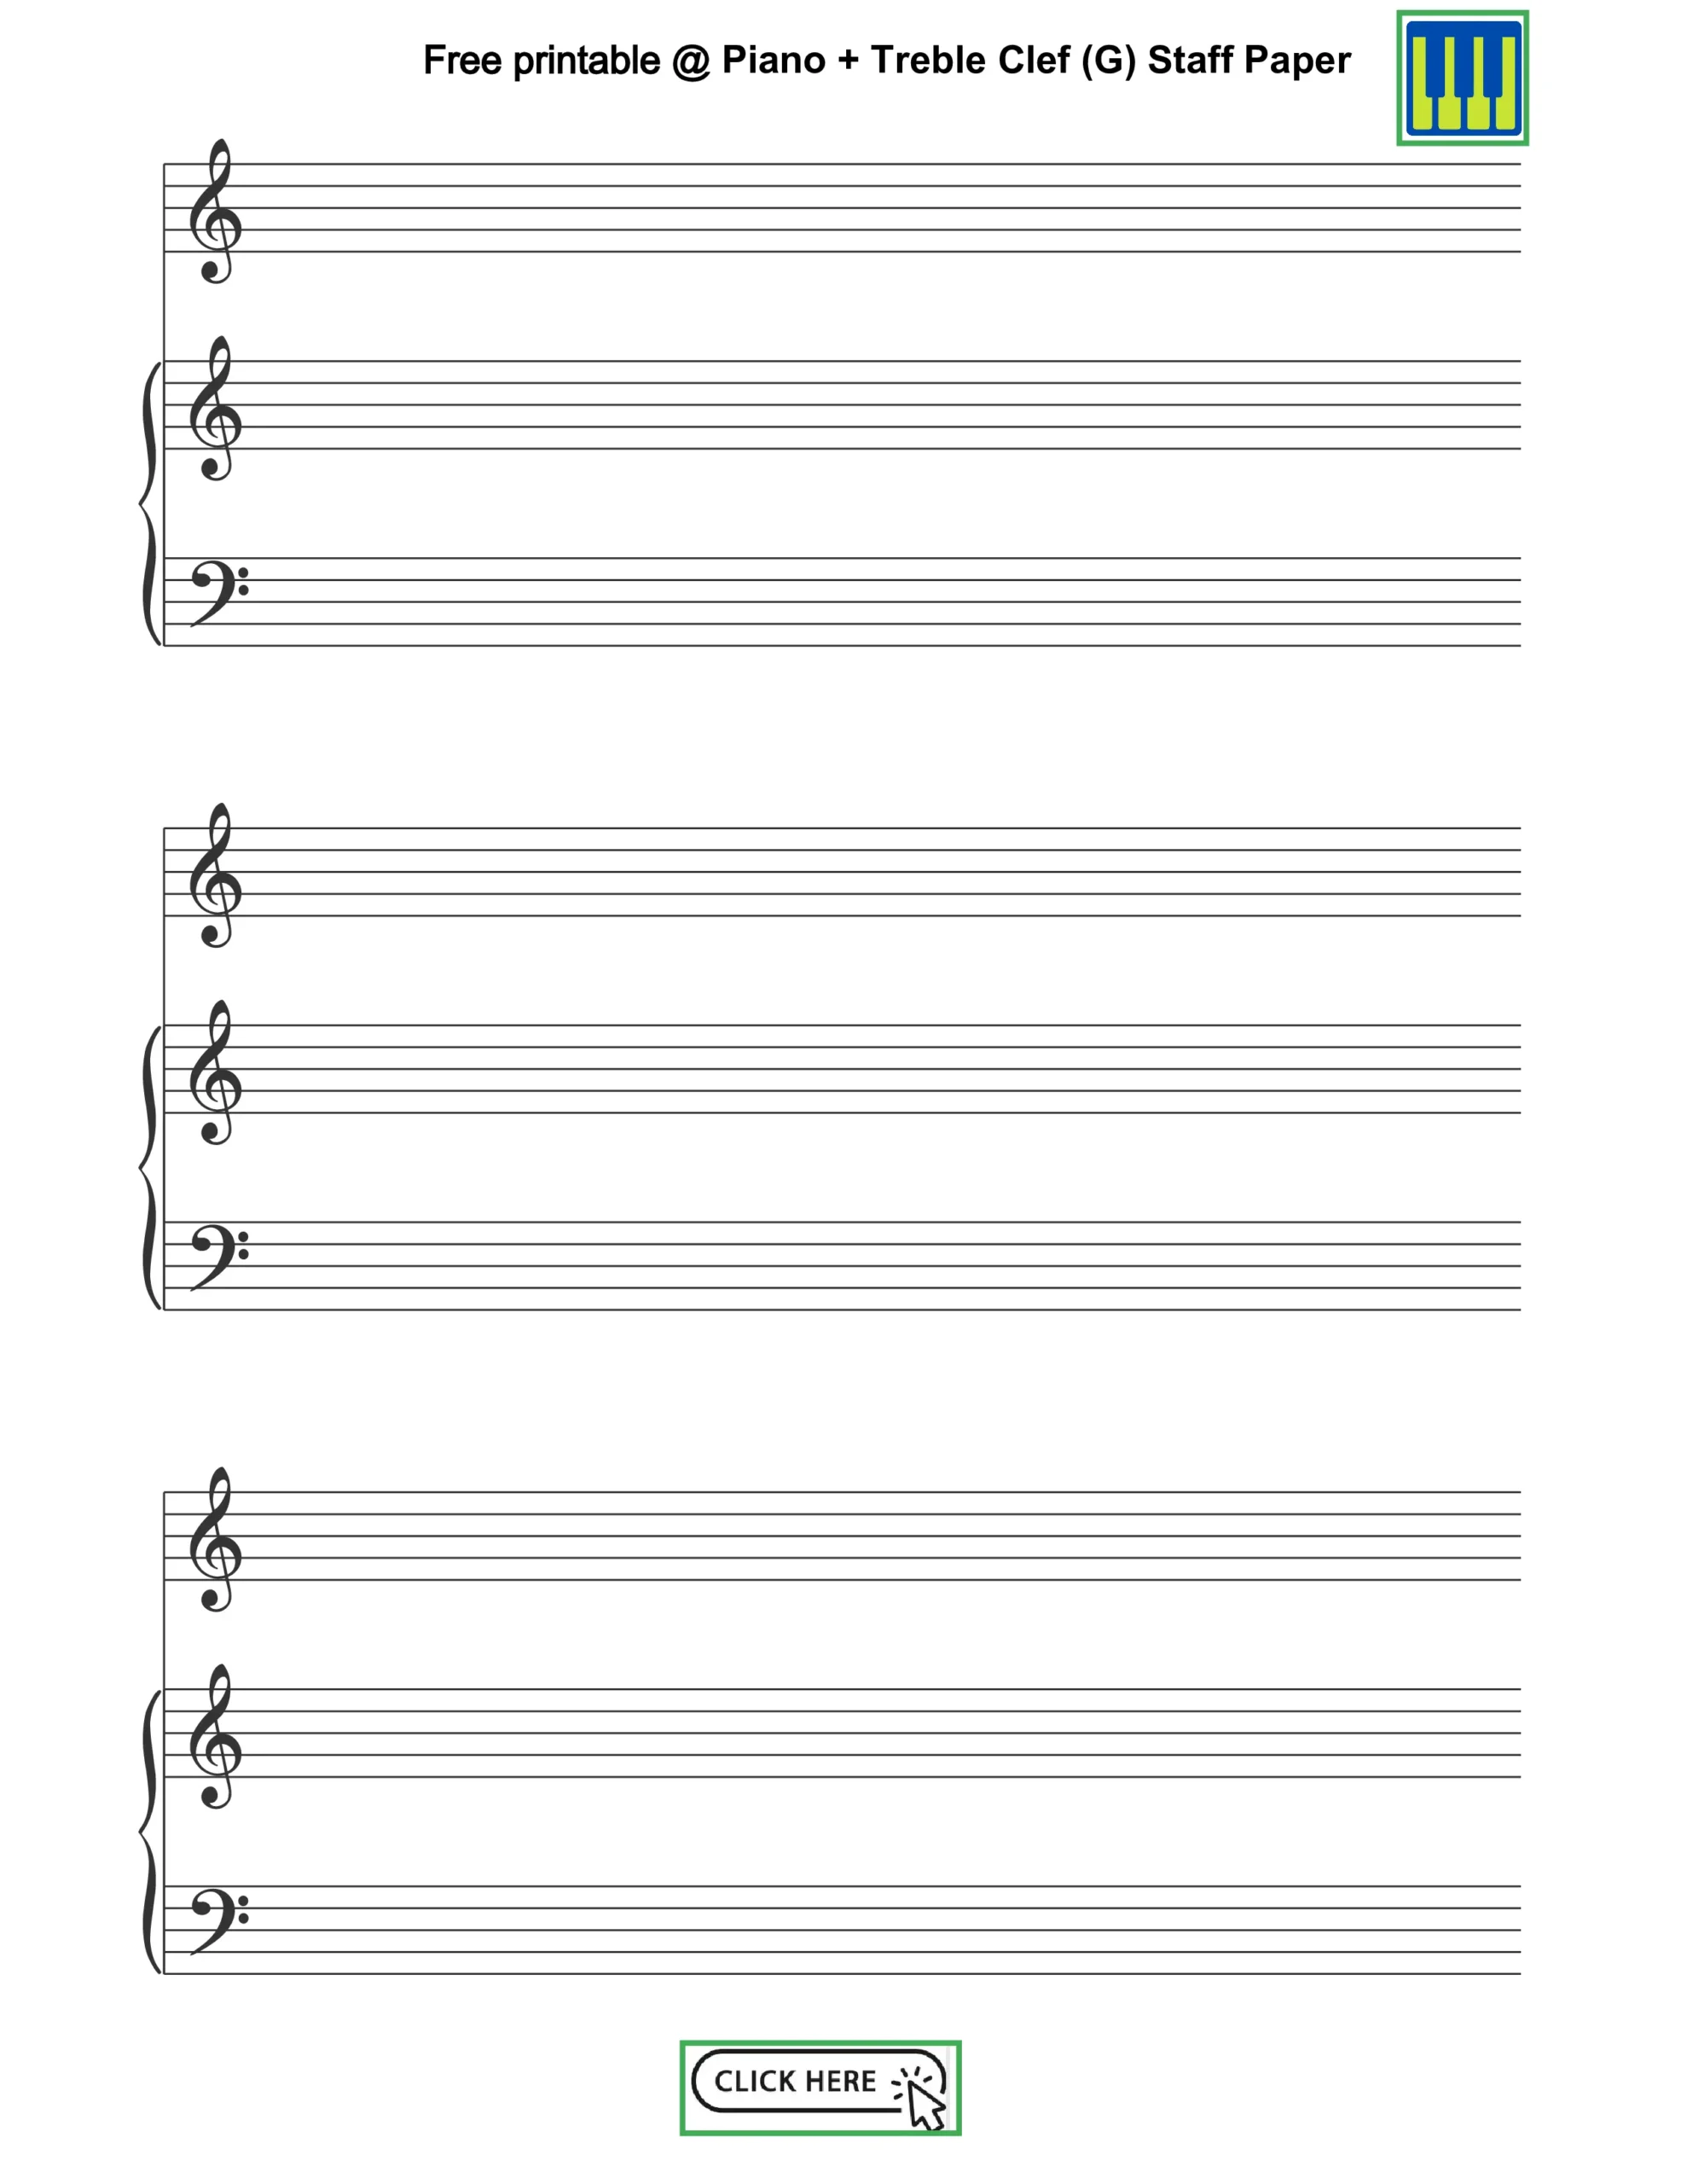 Free printableBlank Sheet Music Piano + Treble Clef (G) Staff Paper Templates